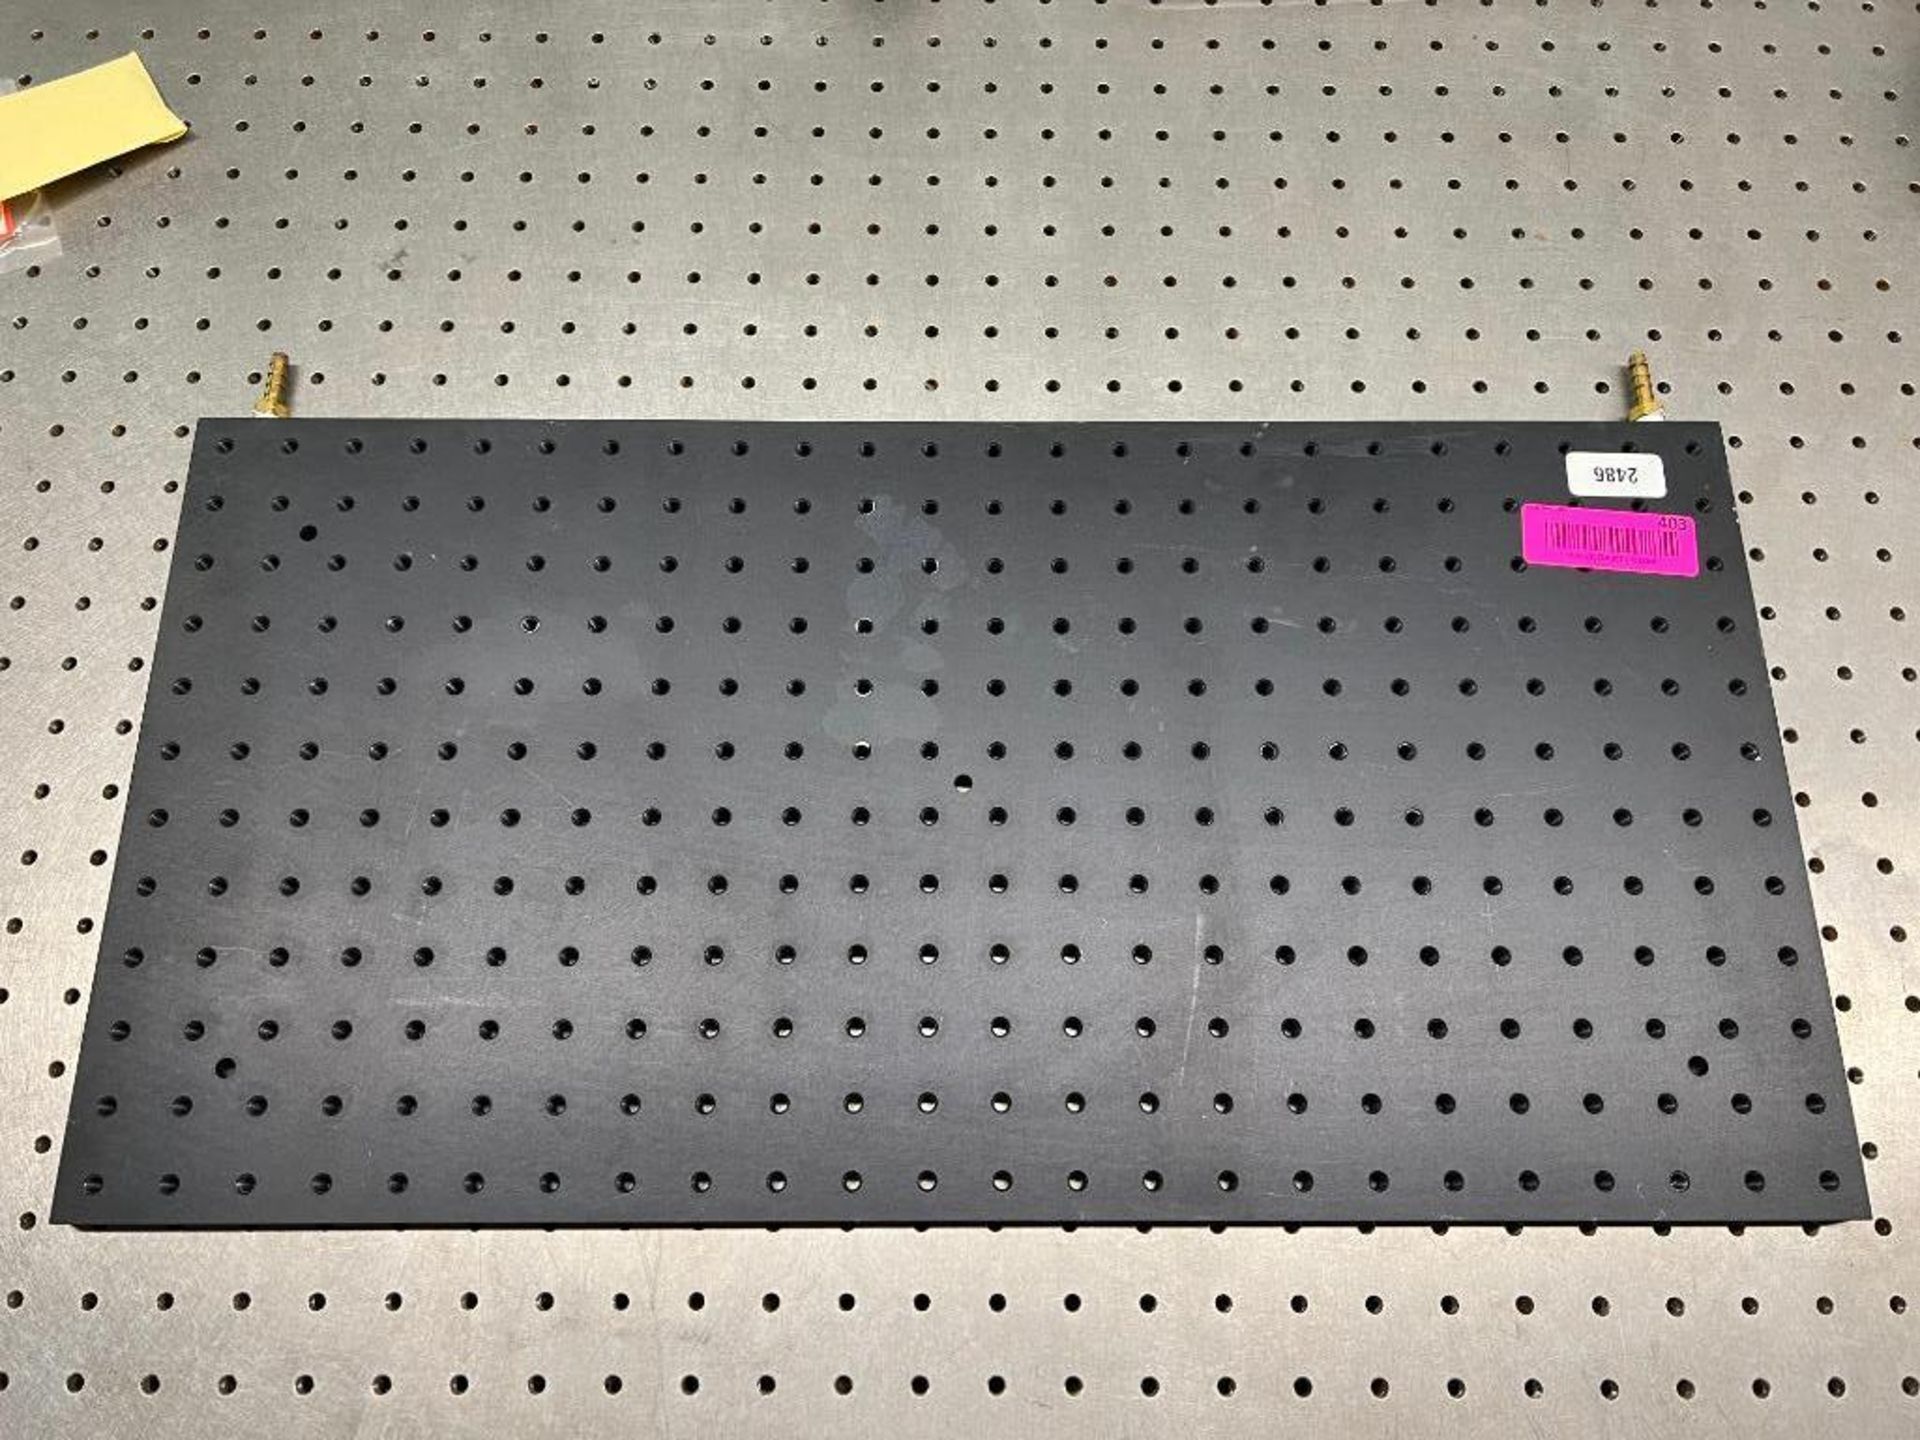 DESCRIPTION: LIQUID COOLED BREADBOARD BRAND/MODEL: THORLABS SIZE: 0.5"X12"X24" RETAIL$: $1,150 ORIGI - Image 2 of 6